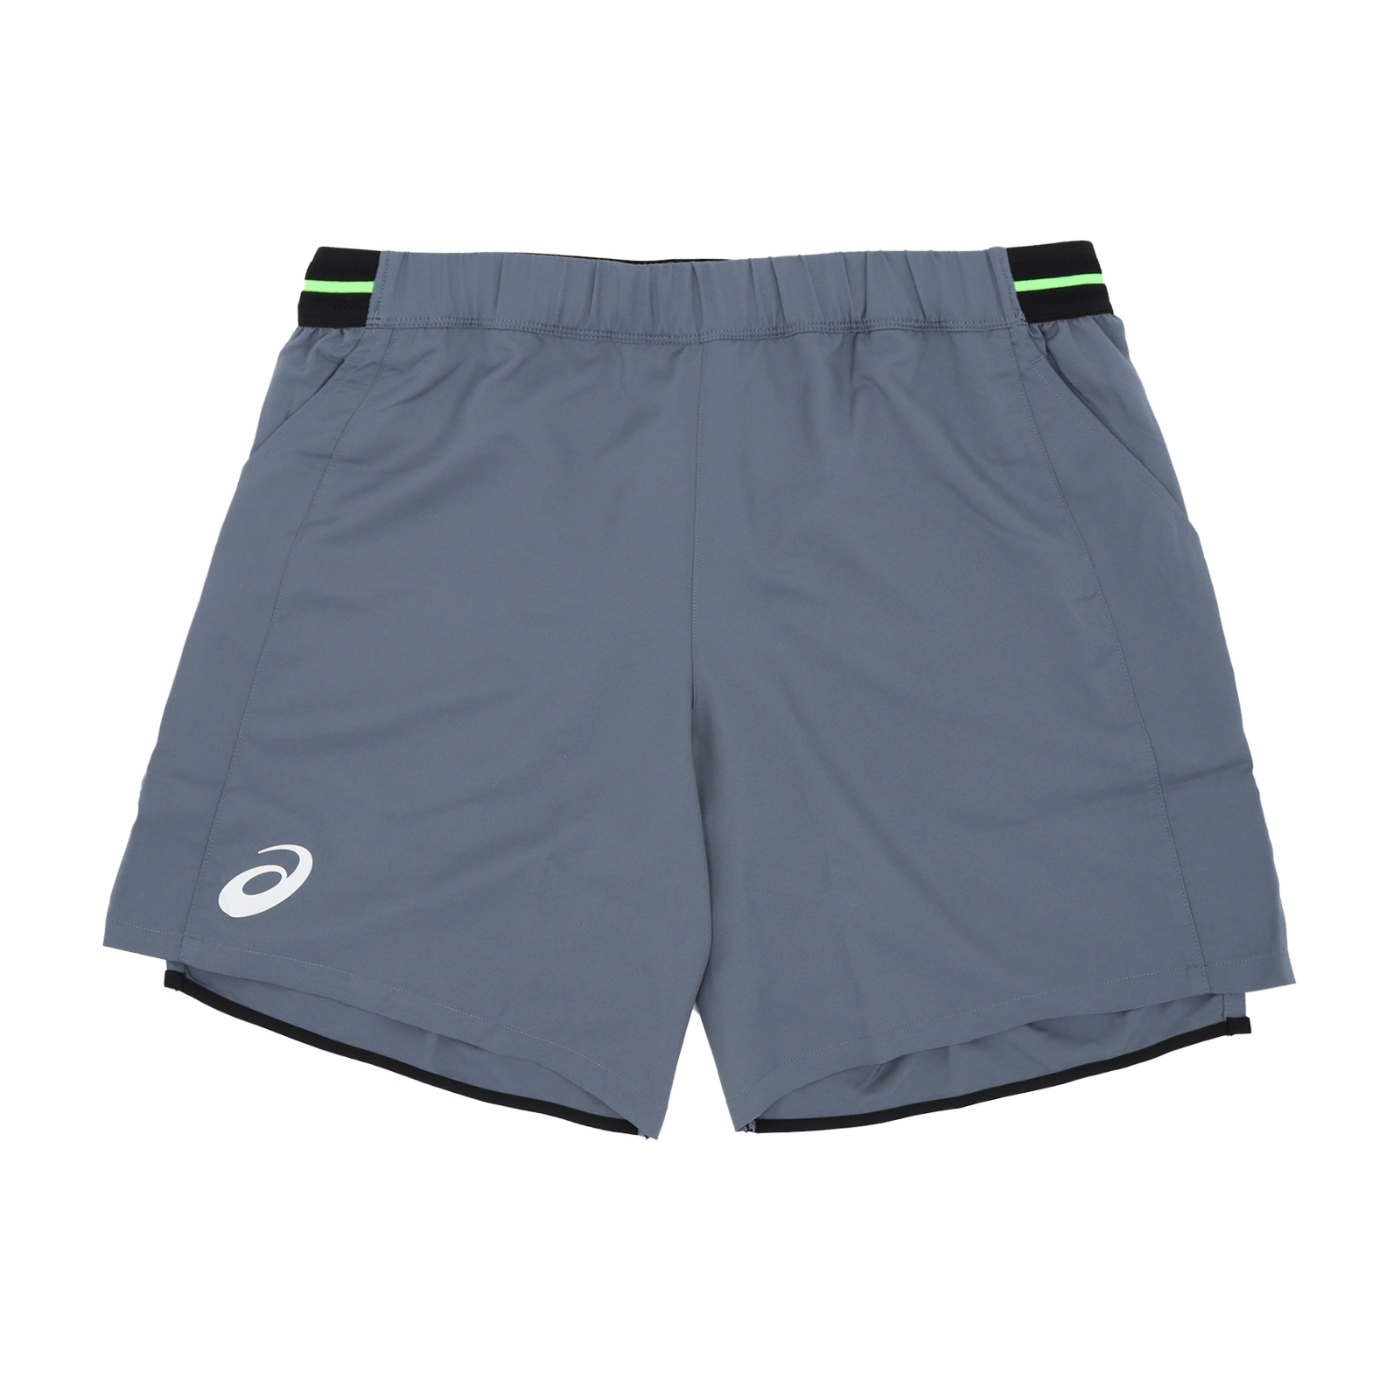 Asics 短褲Tennis Shorts 藍男款運動網球褲口袋透氣合身亞瑟士2041A247405, 其他品牌